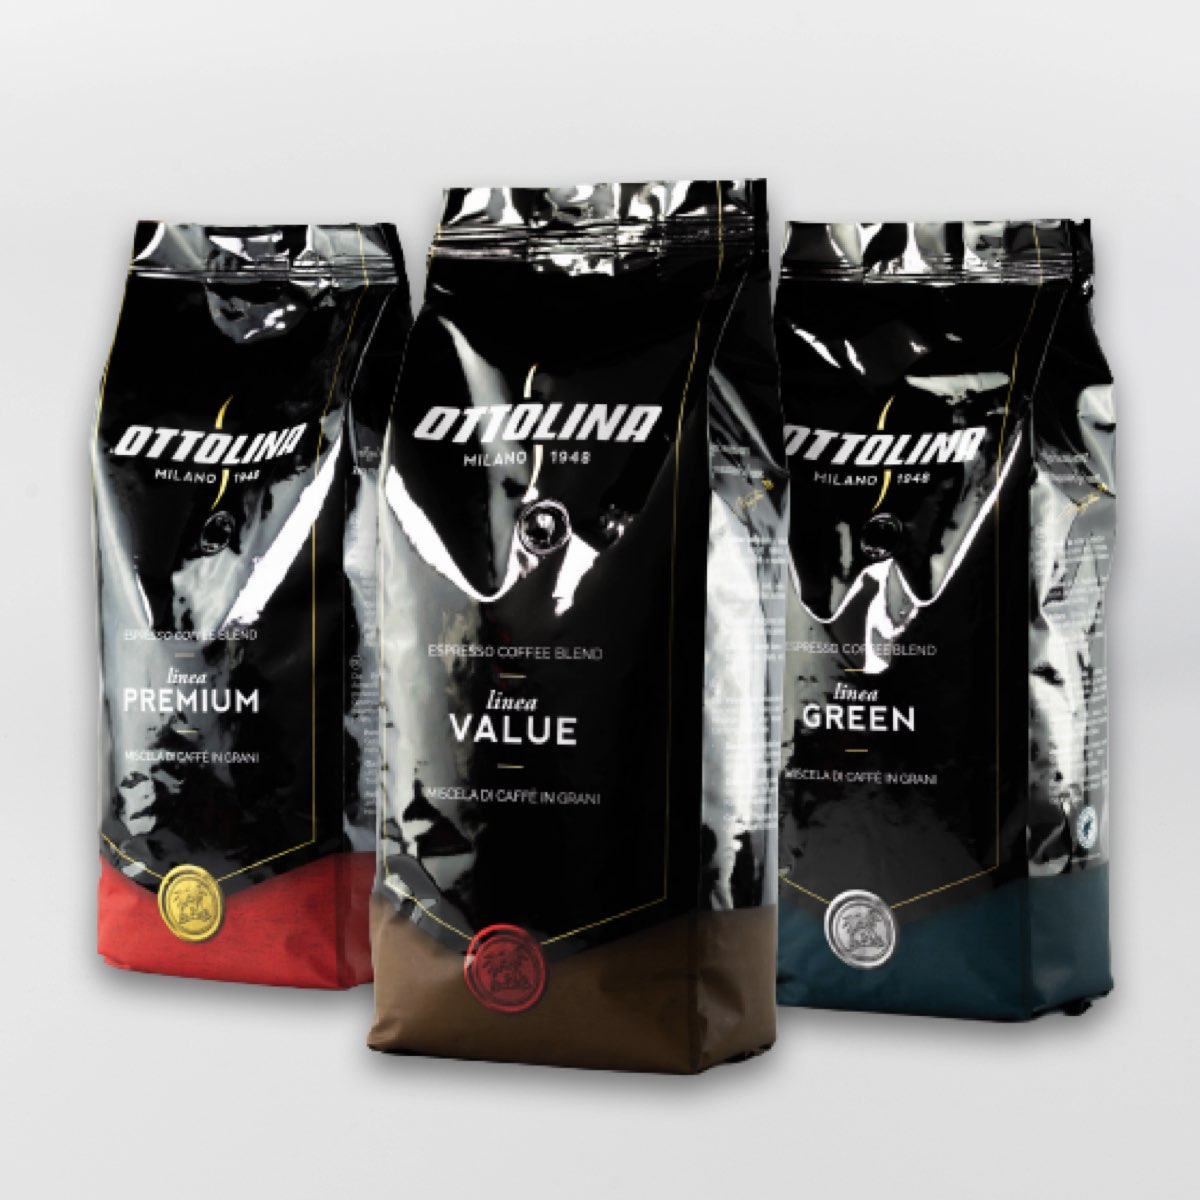 Kaffee Probierpakete | Ottolina